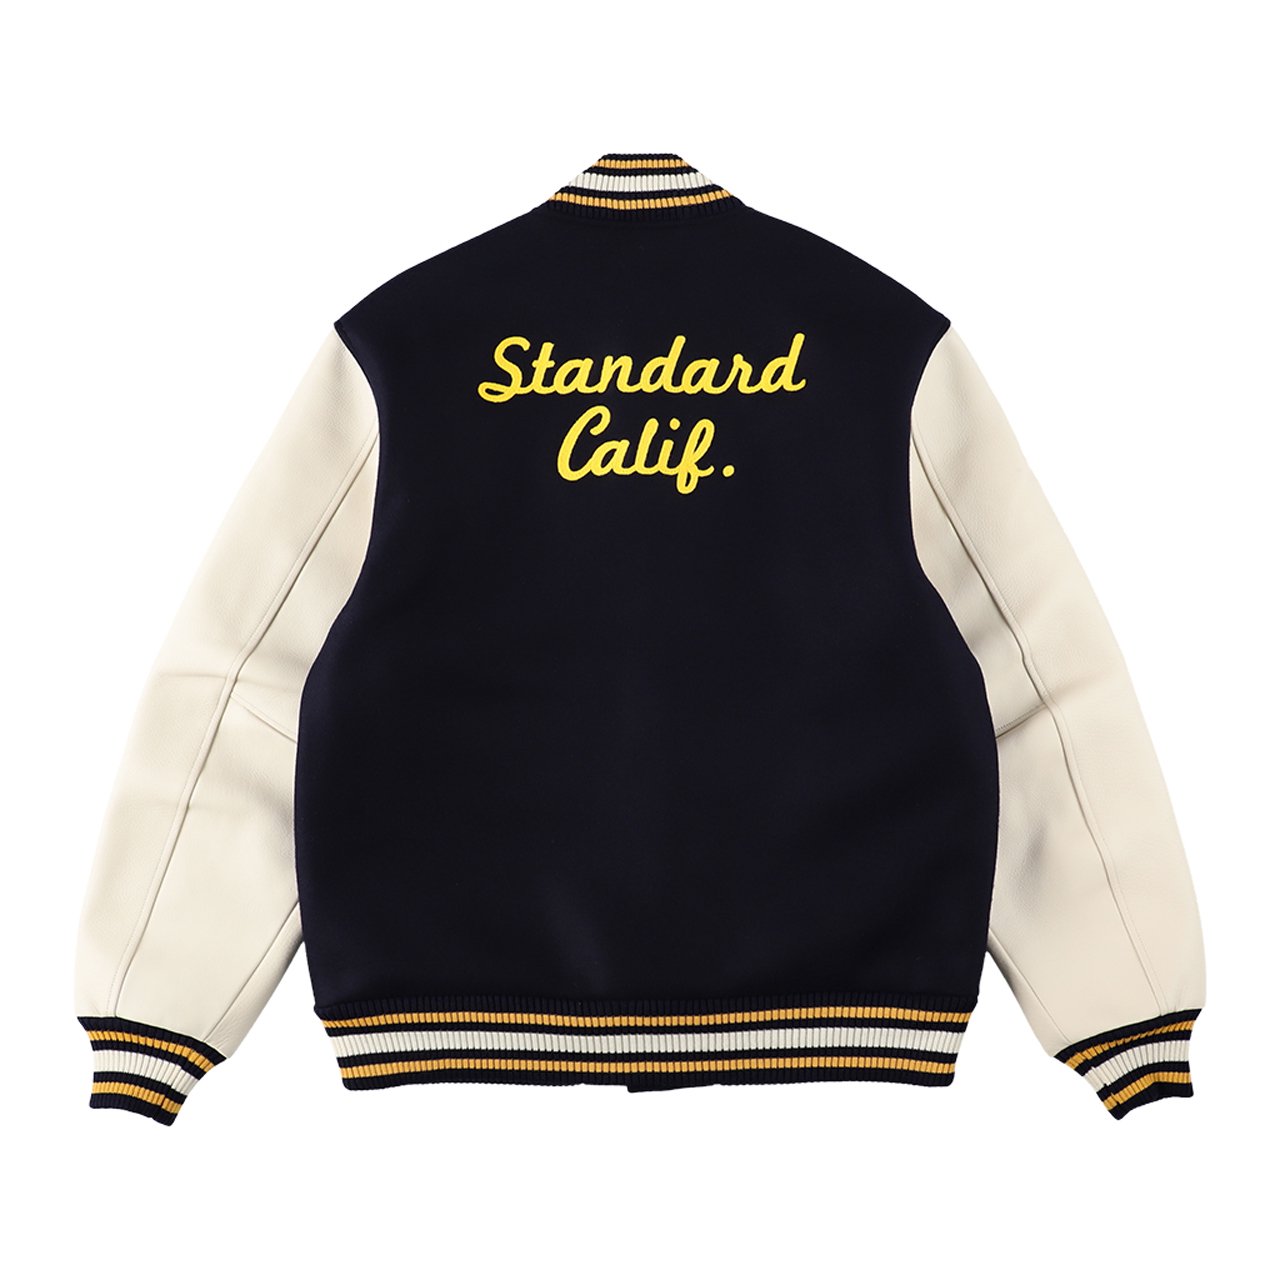 STANDARD CALIFORNIA (スタンダード カリフォルニア)23fw/秋冬
Varsity Jacket Navy
刺繡あり
